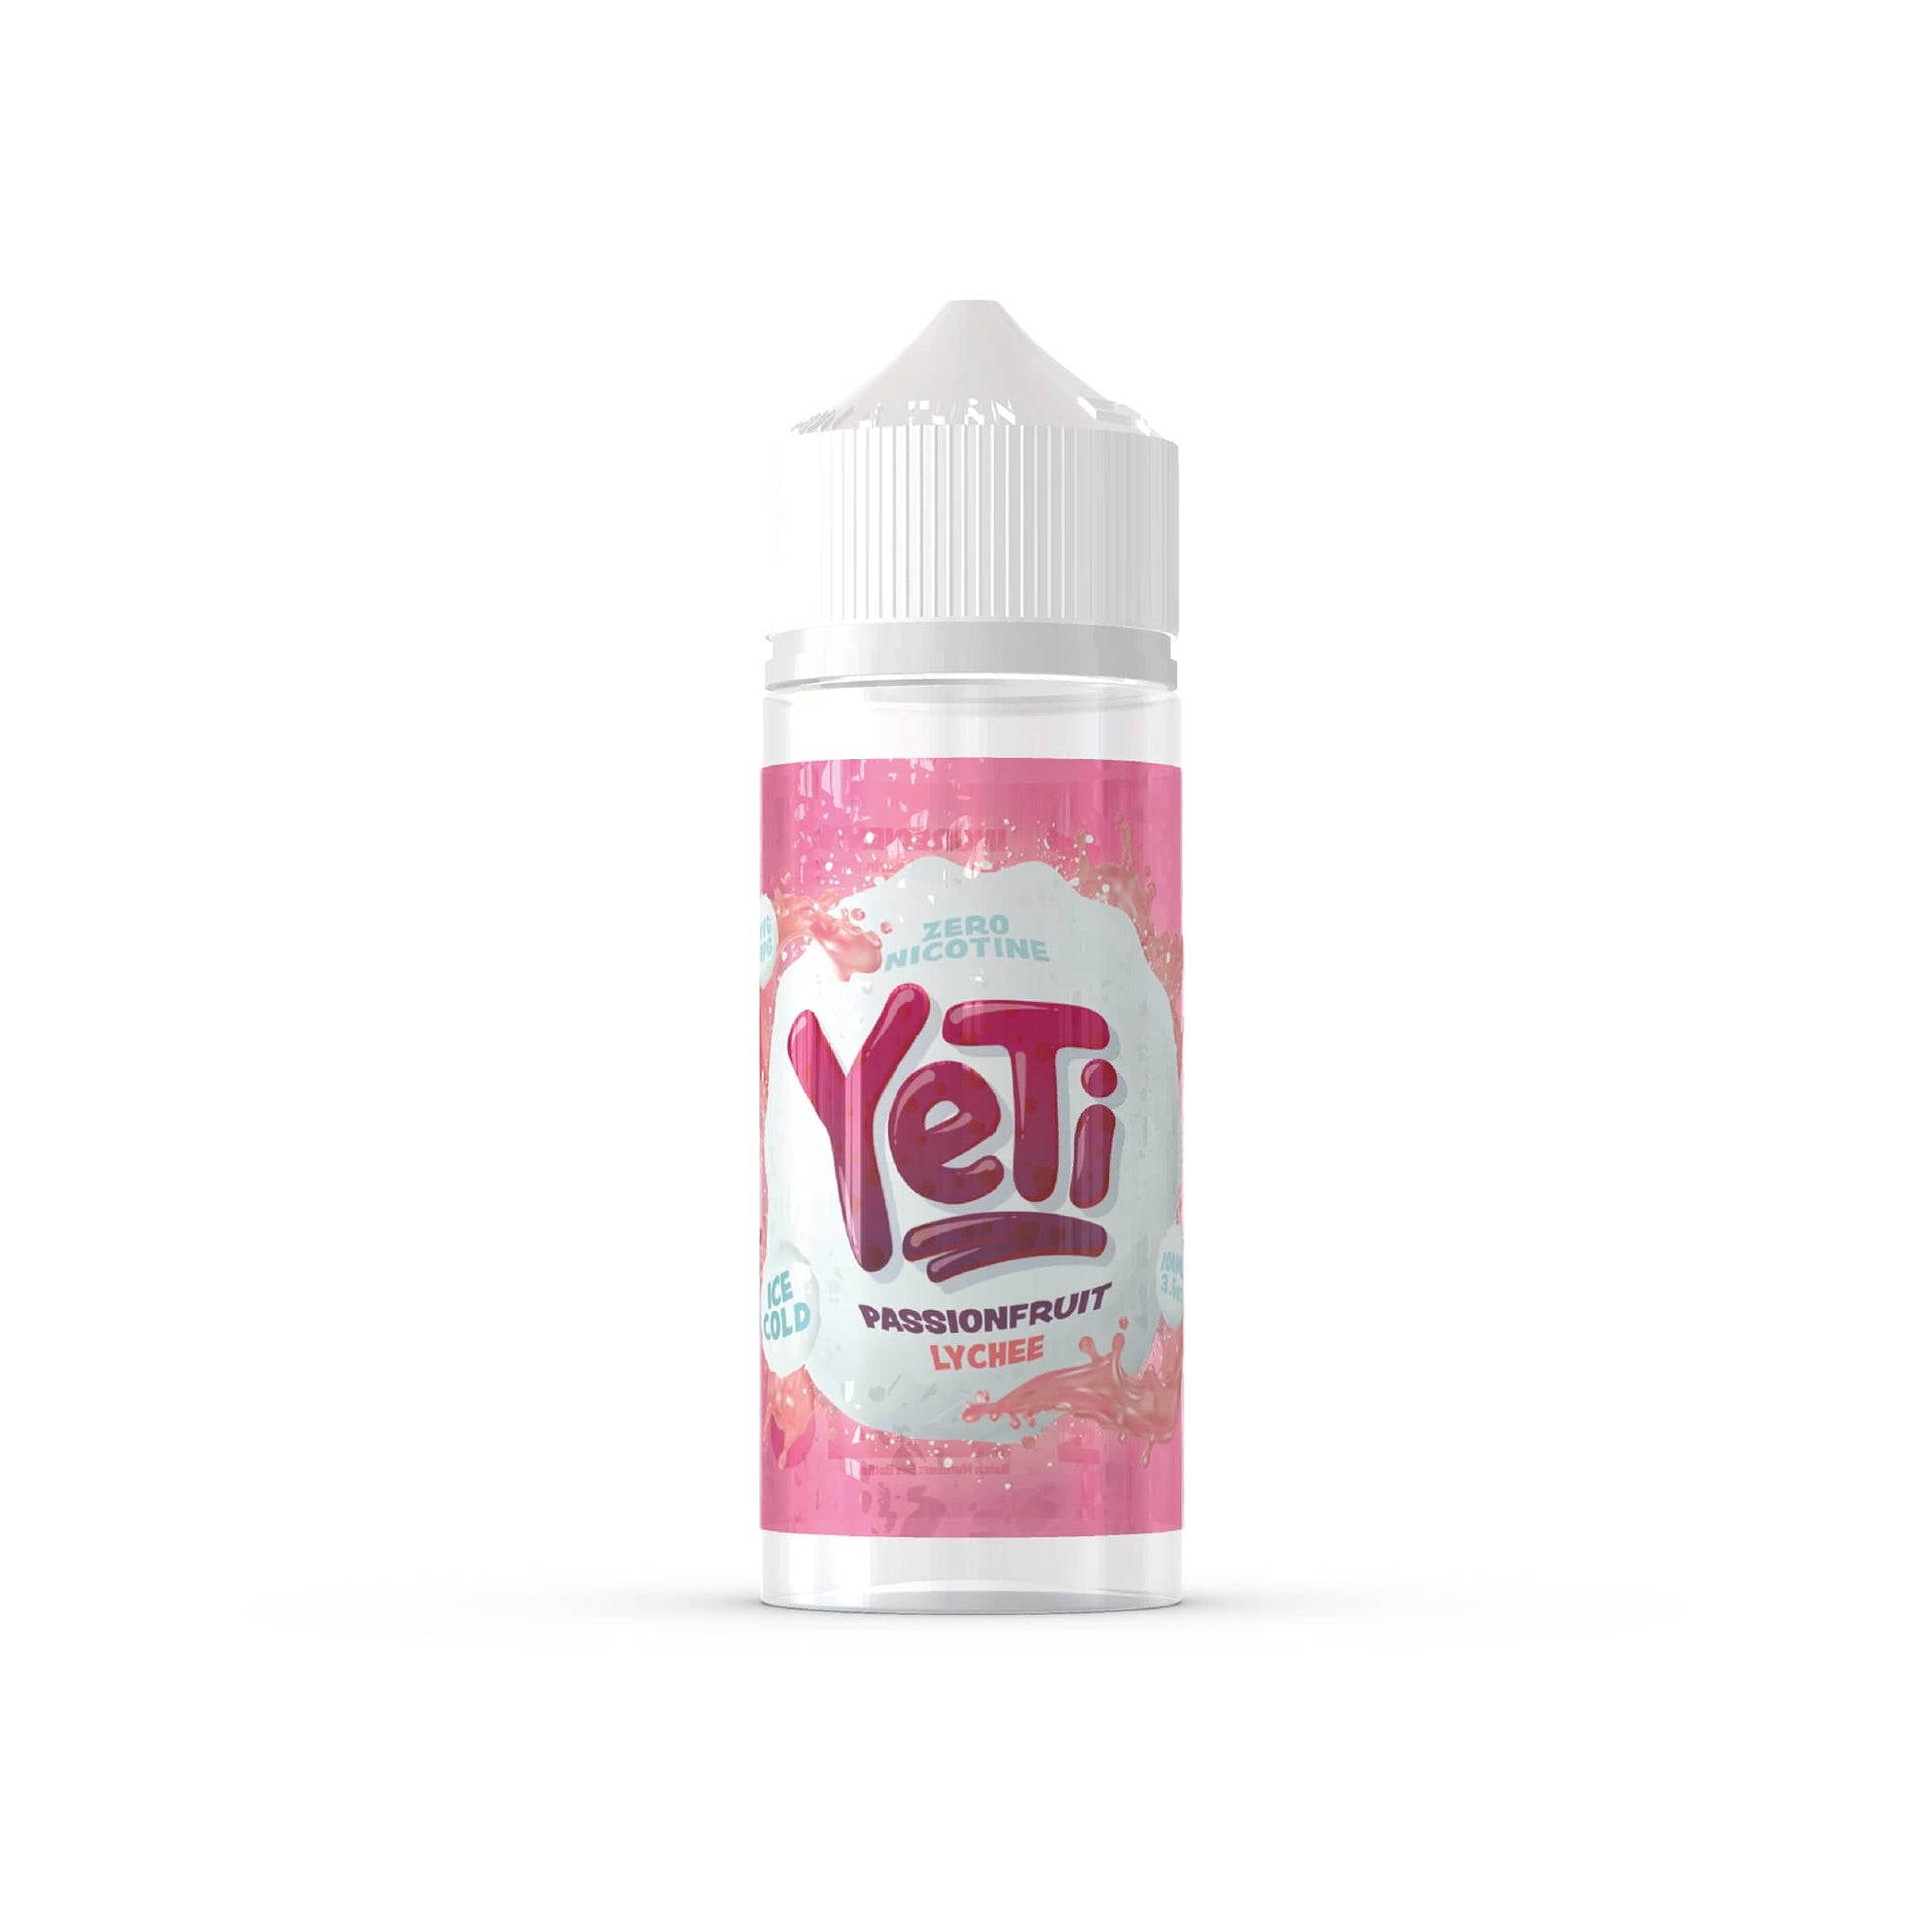 YETI E-Liquid Shortfill Eliquids Passionfruit Lychee Yeti Ice Cold 100ml Shortfill E-Liquid